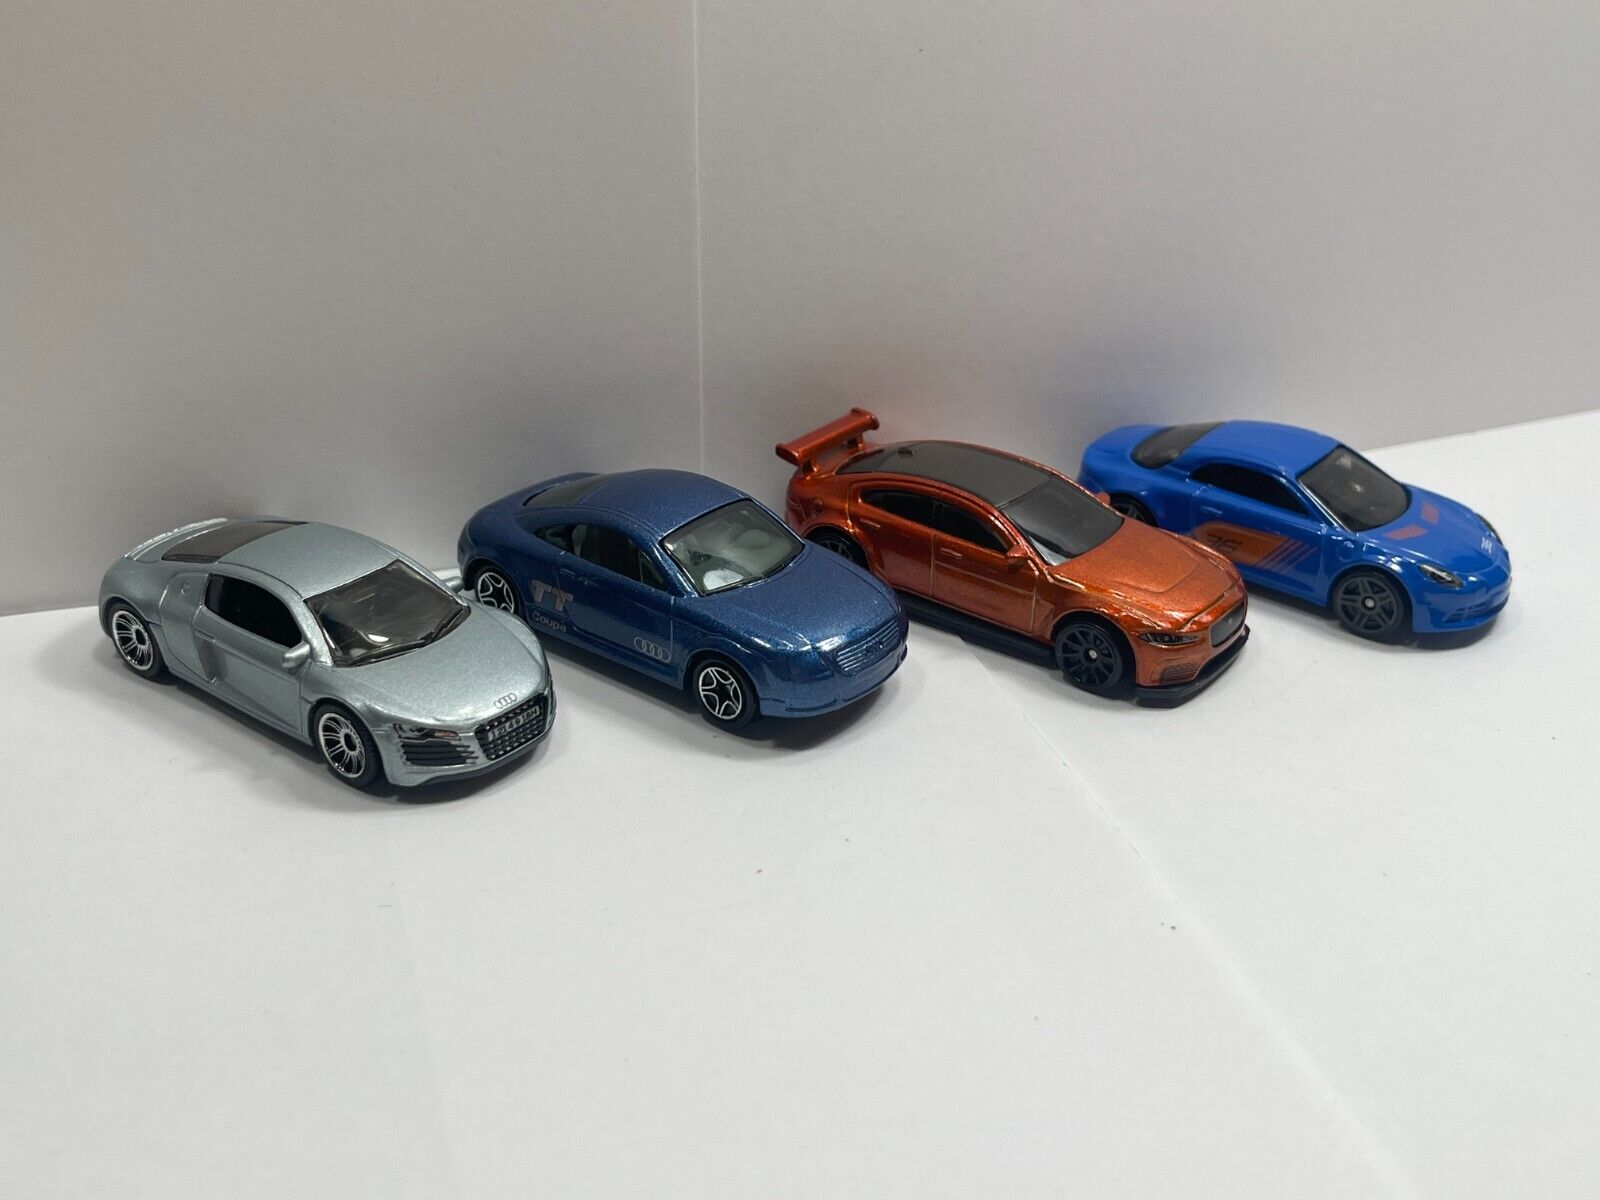 1/64 Hot Wheels Lot of 4 Exotic Cars (Audi TT Coupe, Audi R8, Jaguar XE, Alpine)